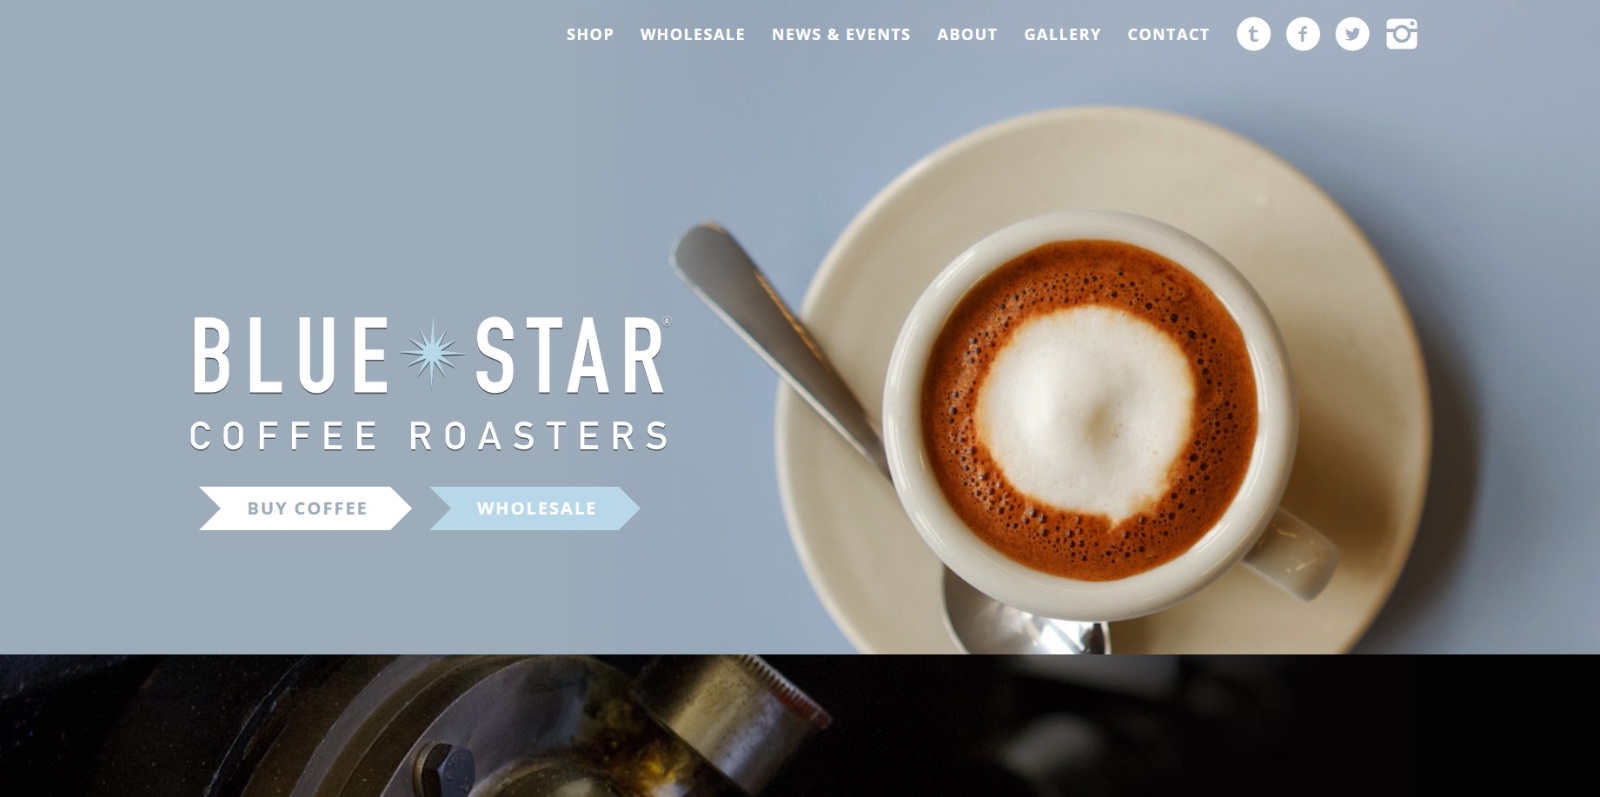 Blue Star Coffee Roasters